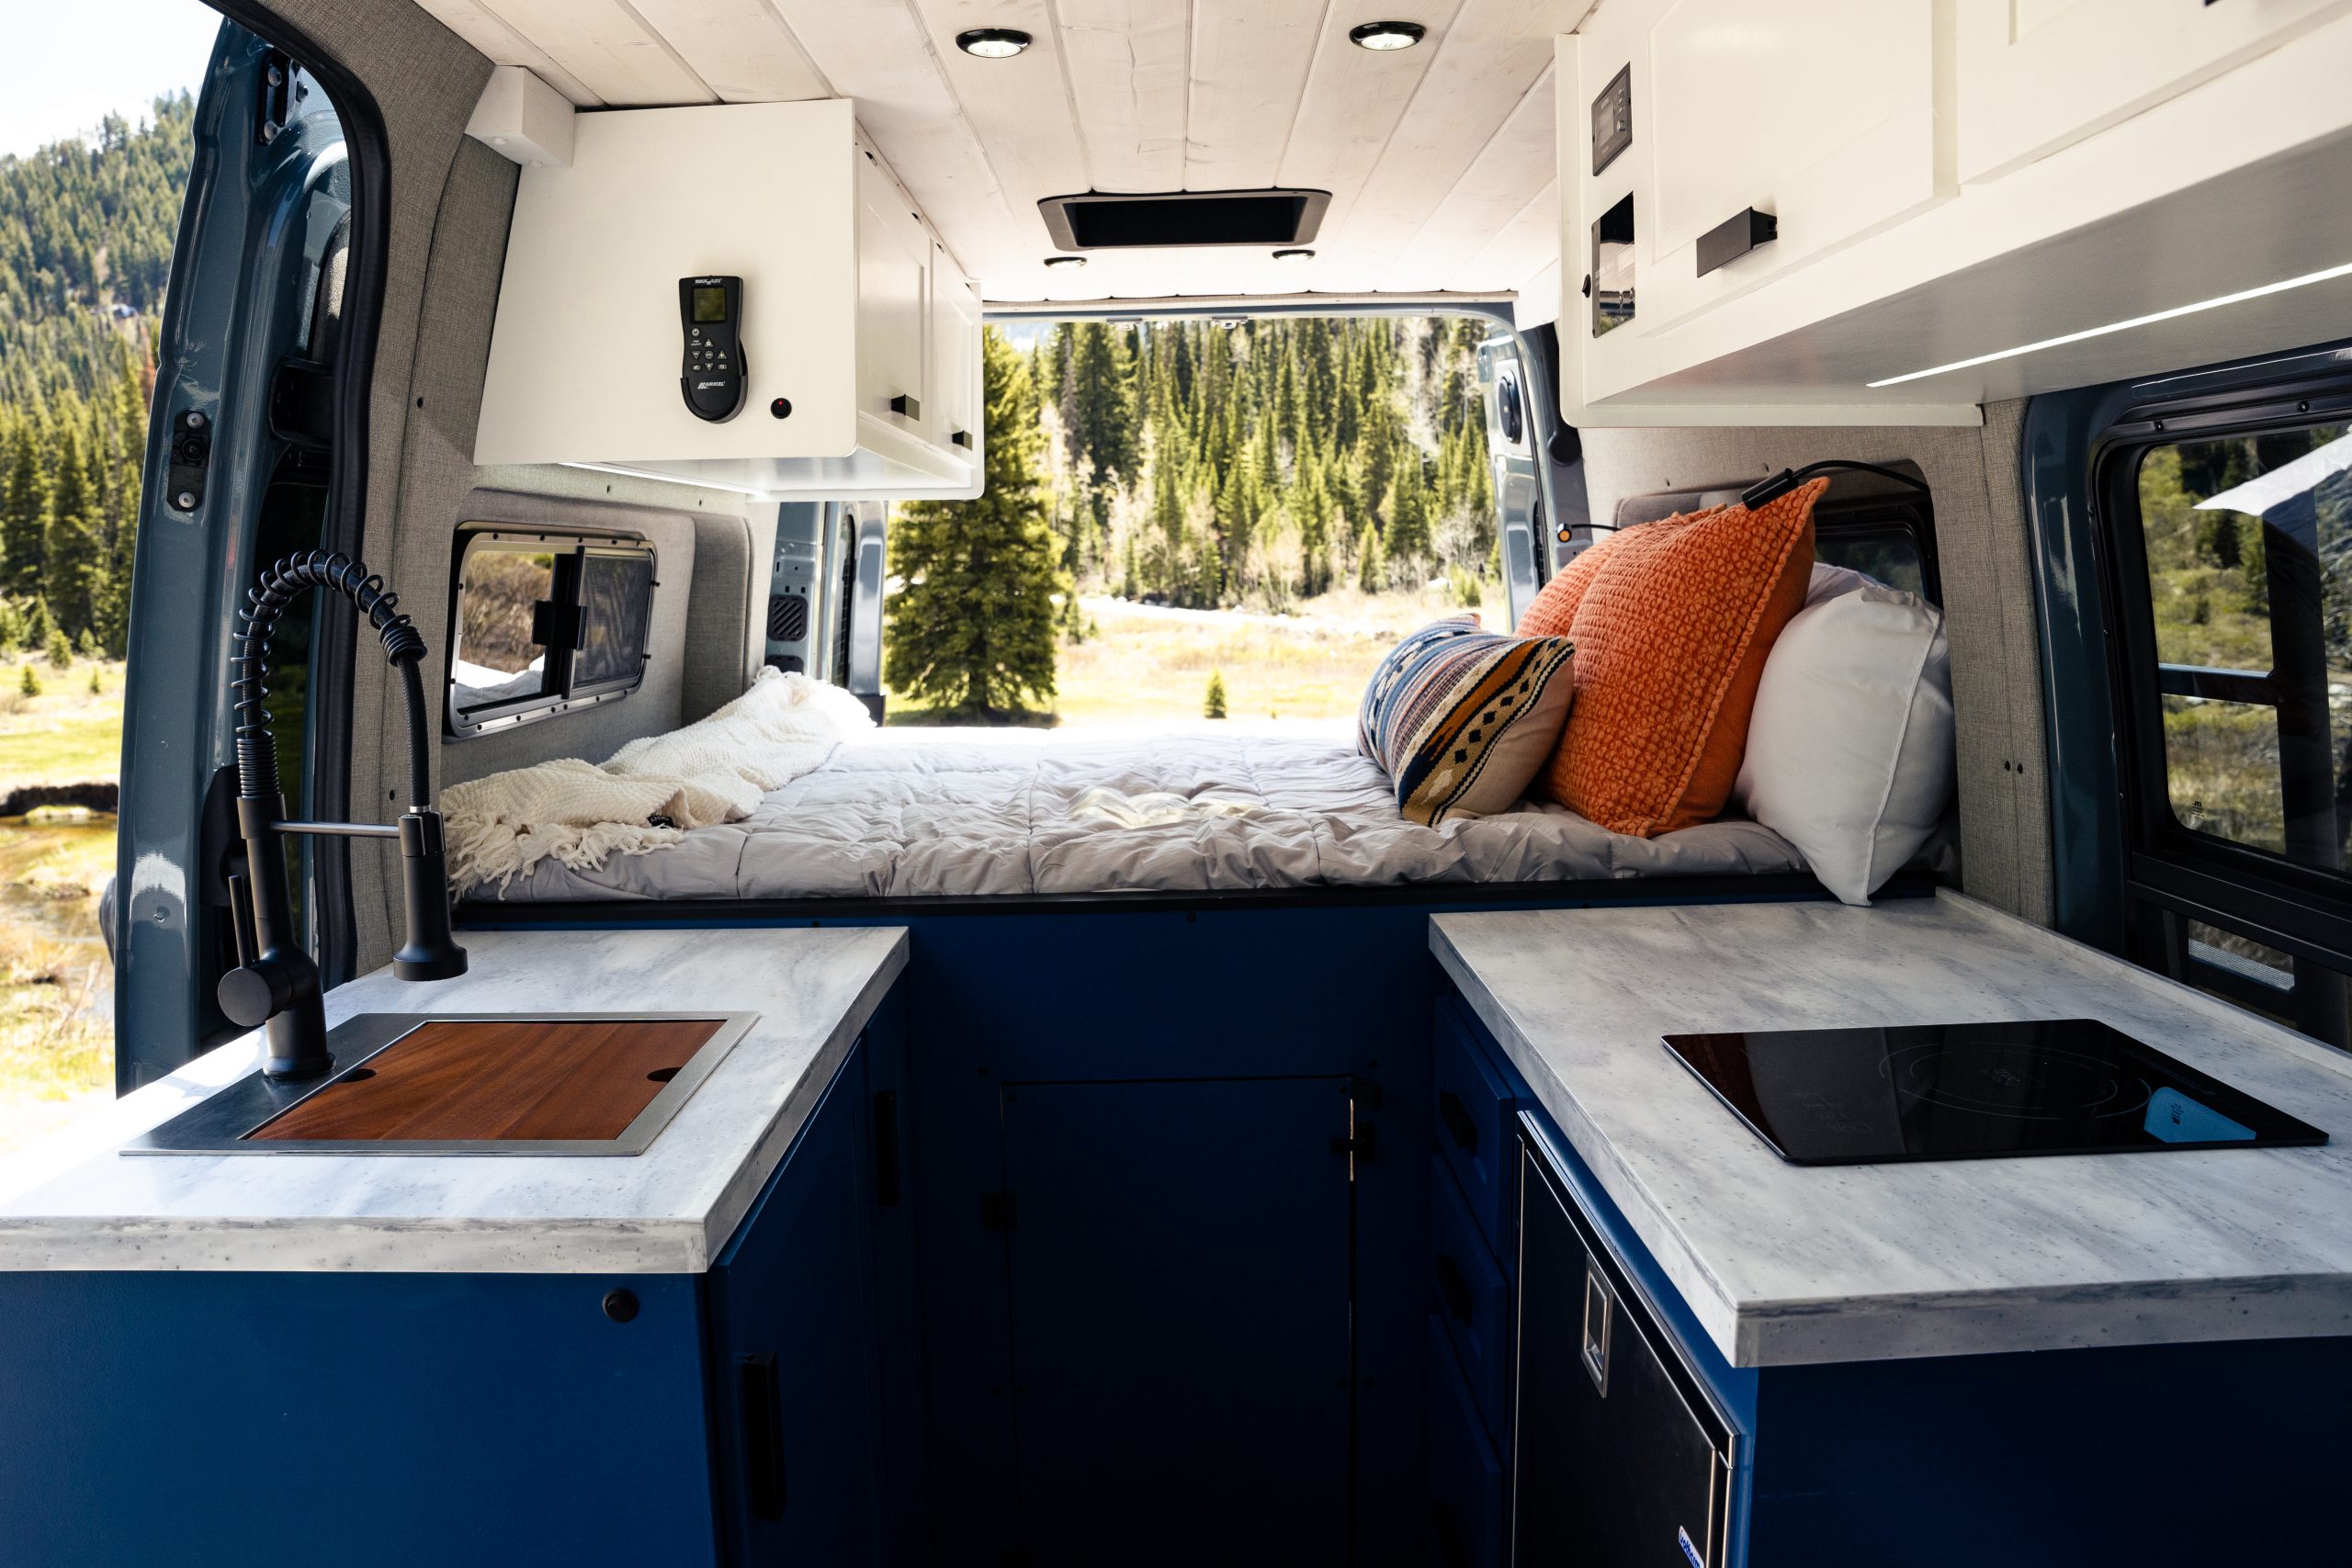 Camper Van Conversions To Inspire Your Build